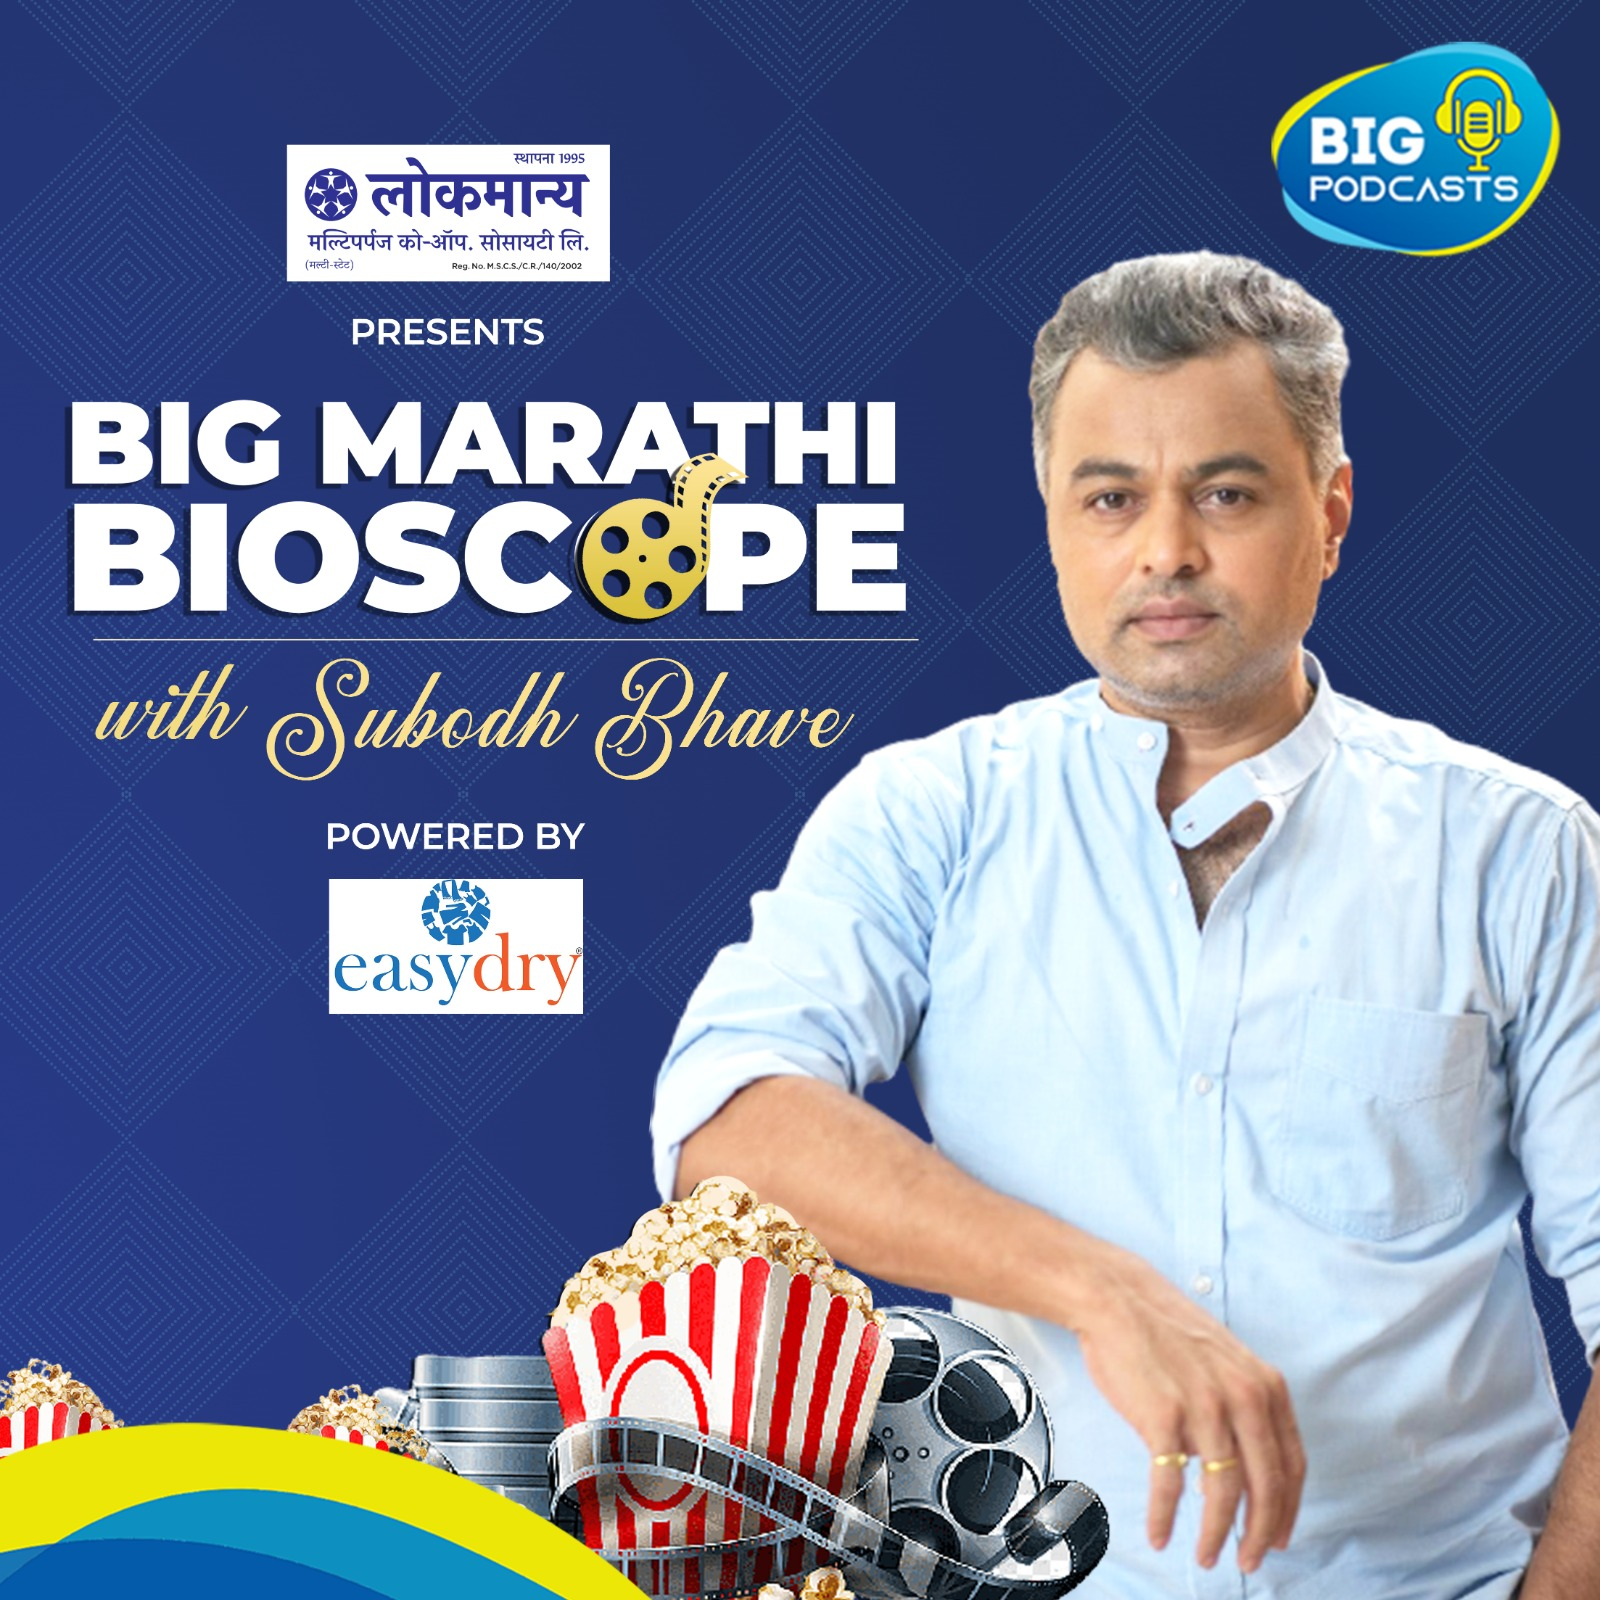 Mhamdu Khatik aka Ashok Saraf is mobbed! Why?! | BIG Marathi Bioscope with Subodh Bhave | Eps. 01